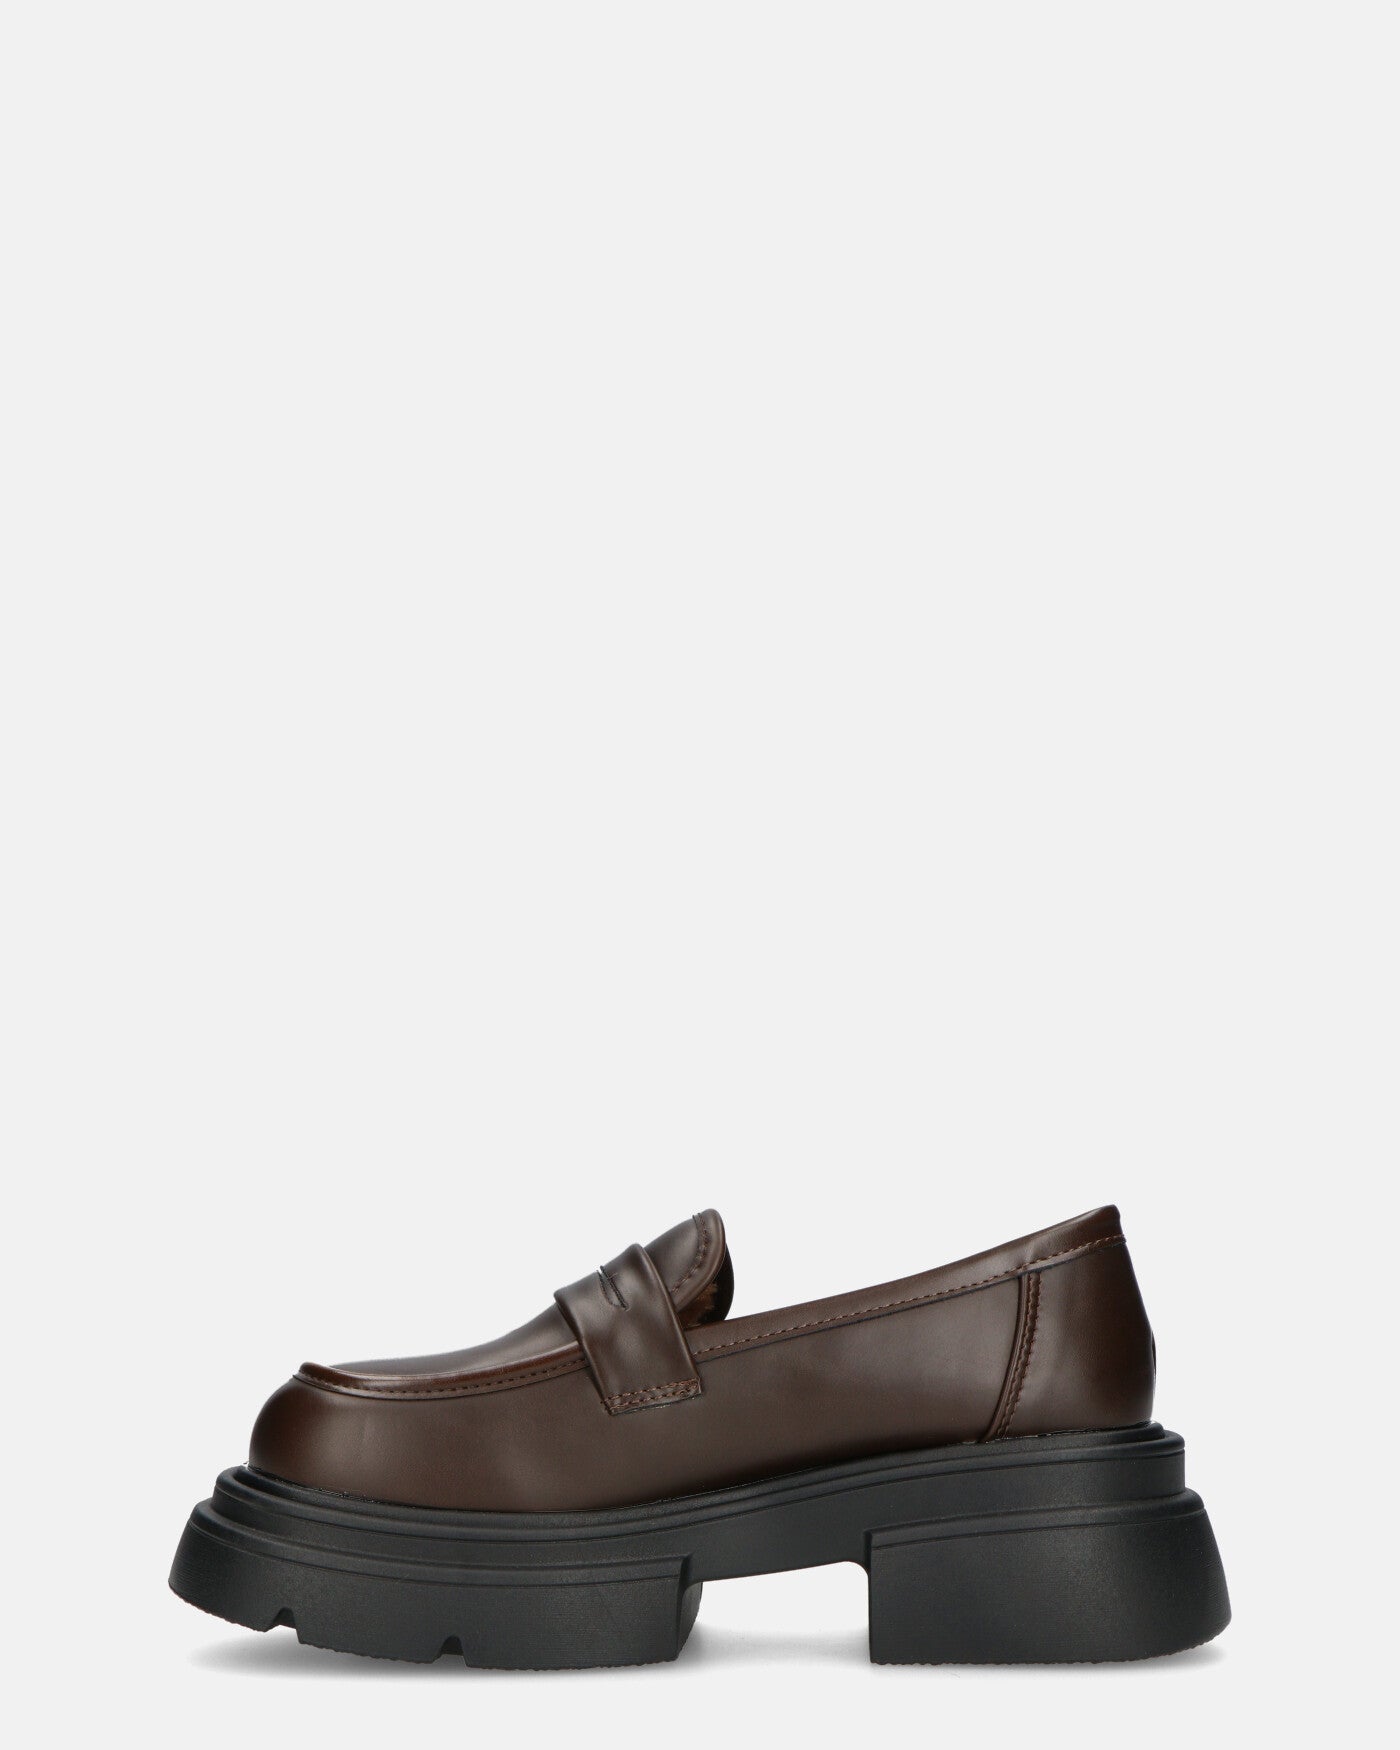 MARIKA - chaussures plates mocassins à plateforme marron